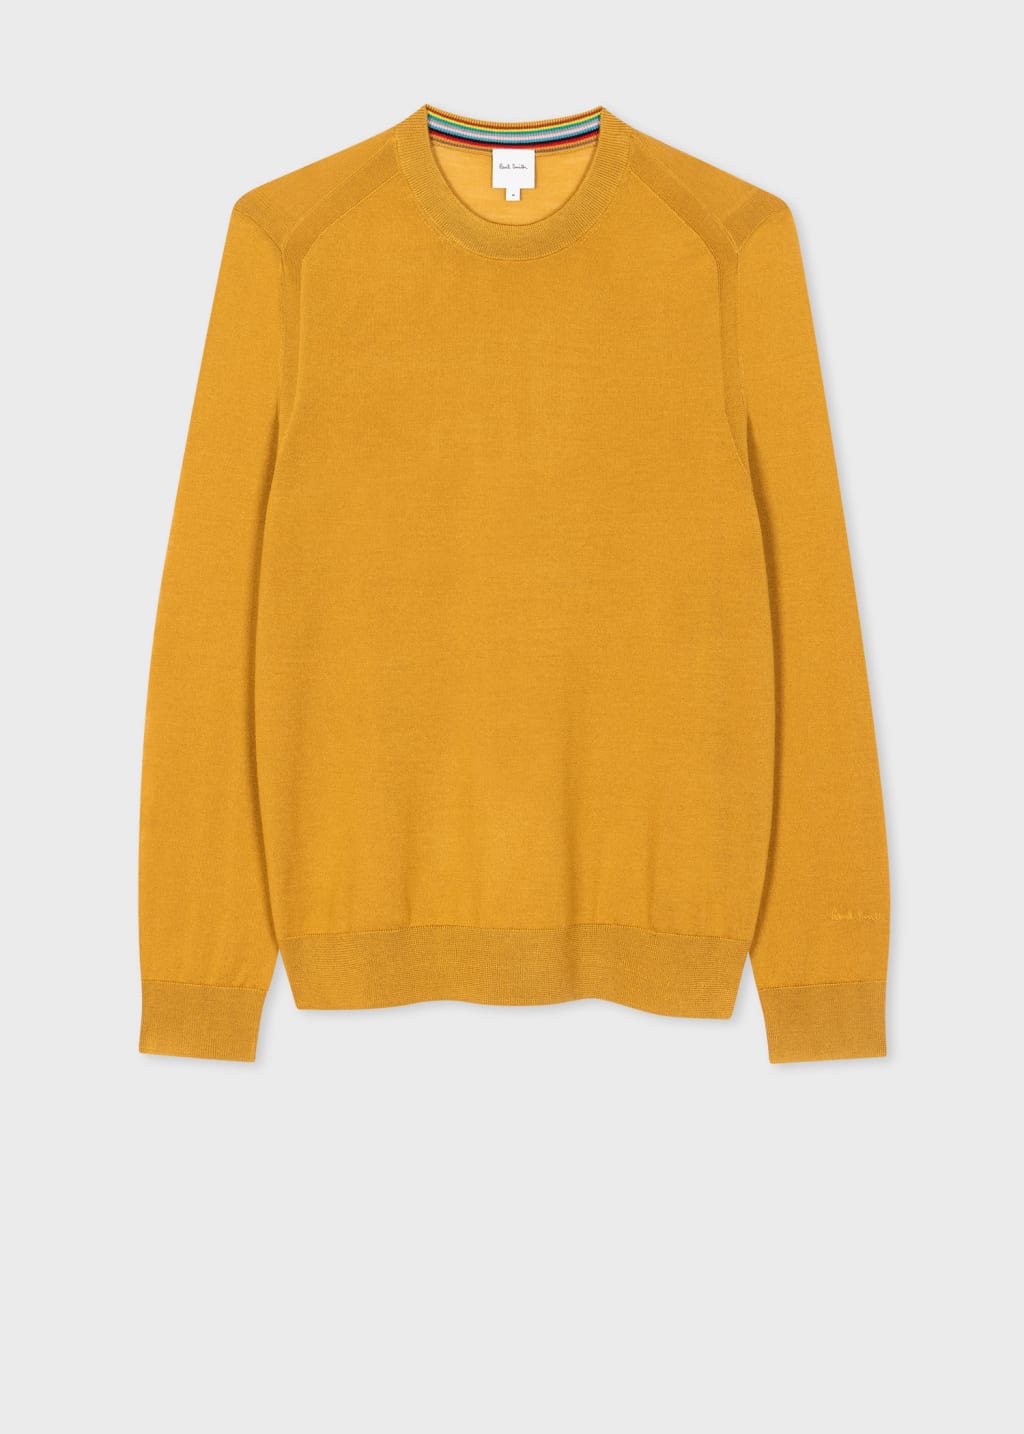 Front View - Mustard Merino Wool Sweater Paul Smith